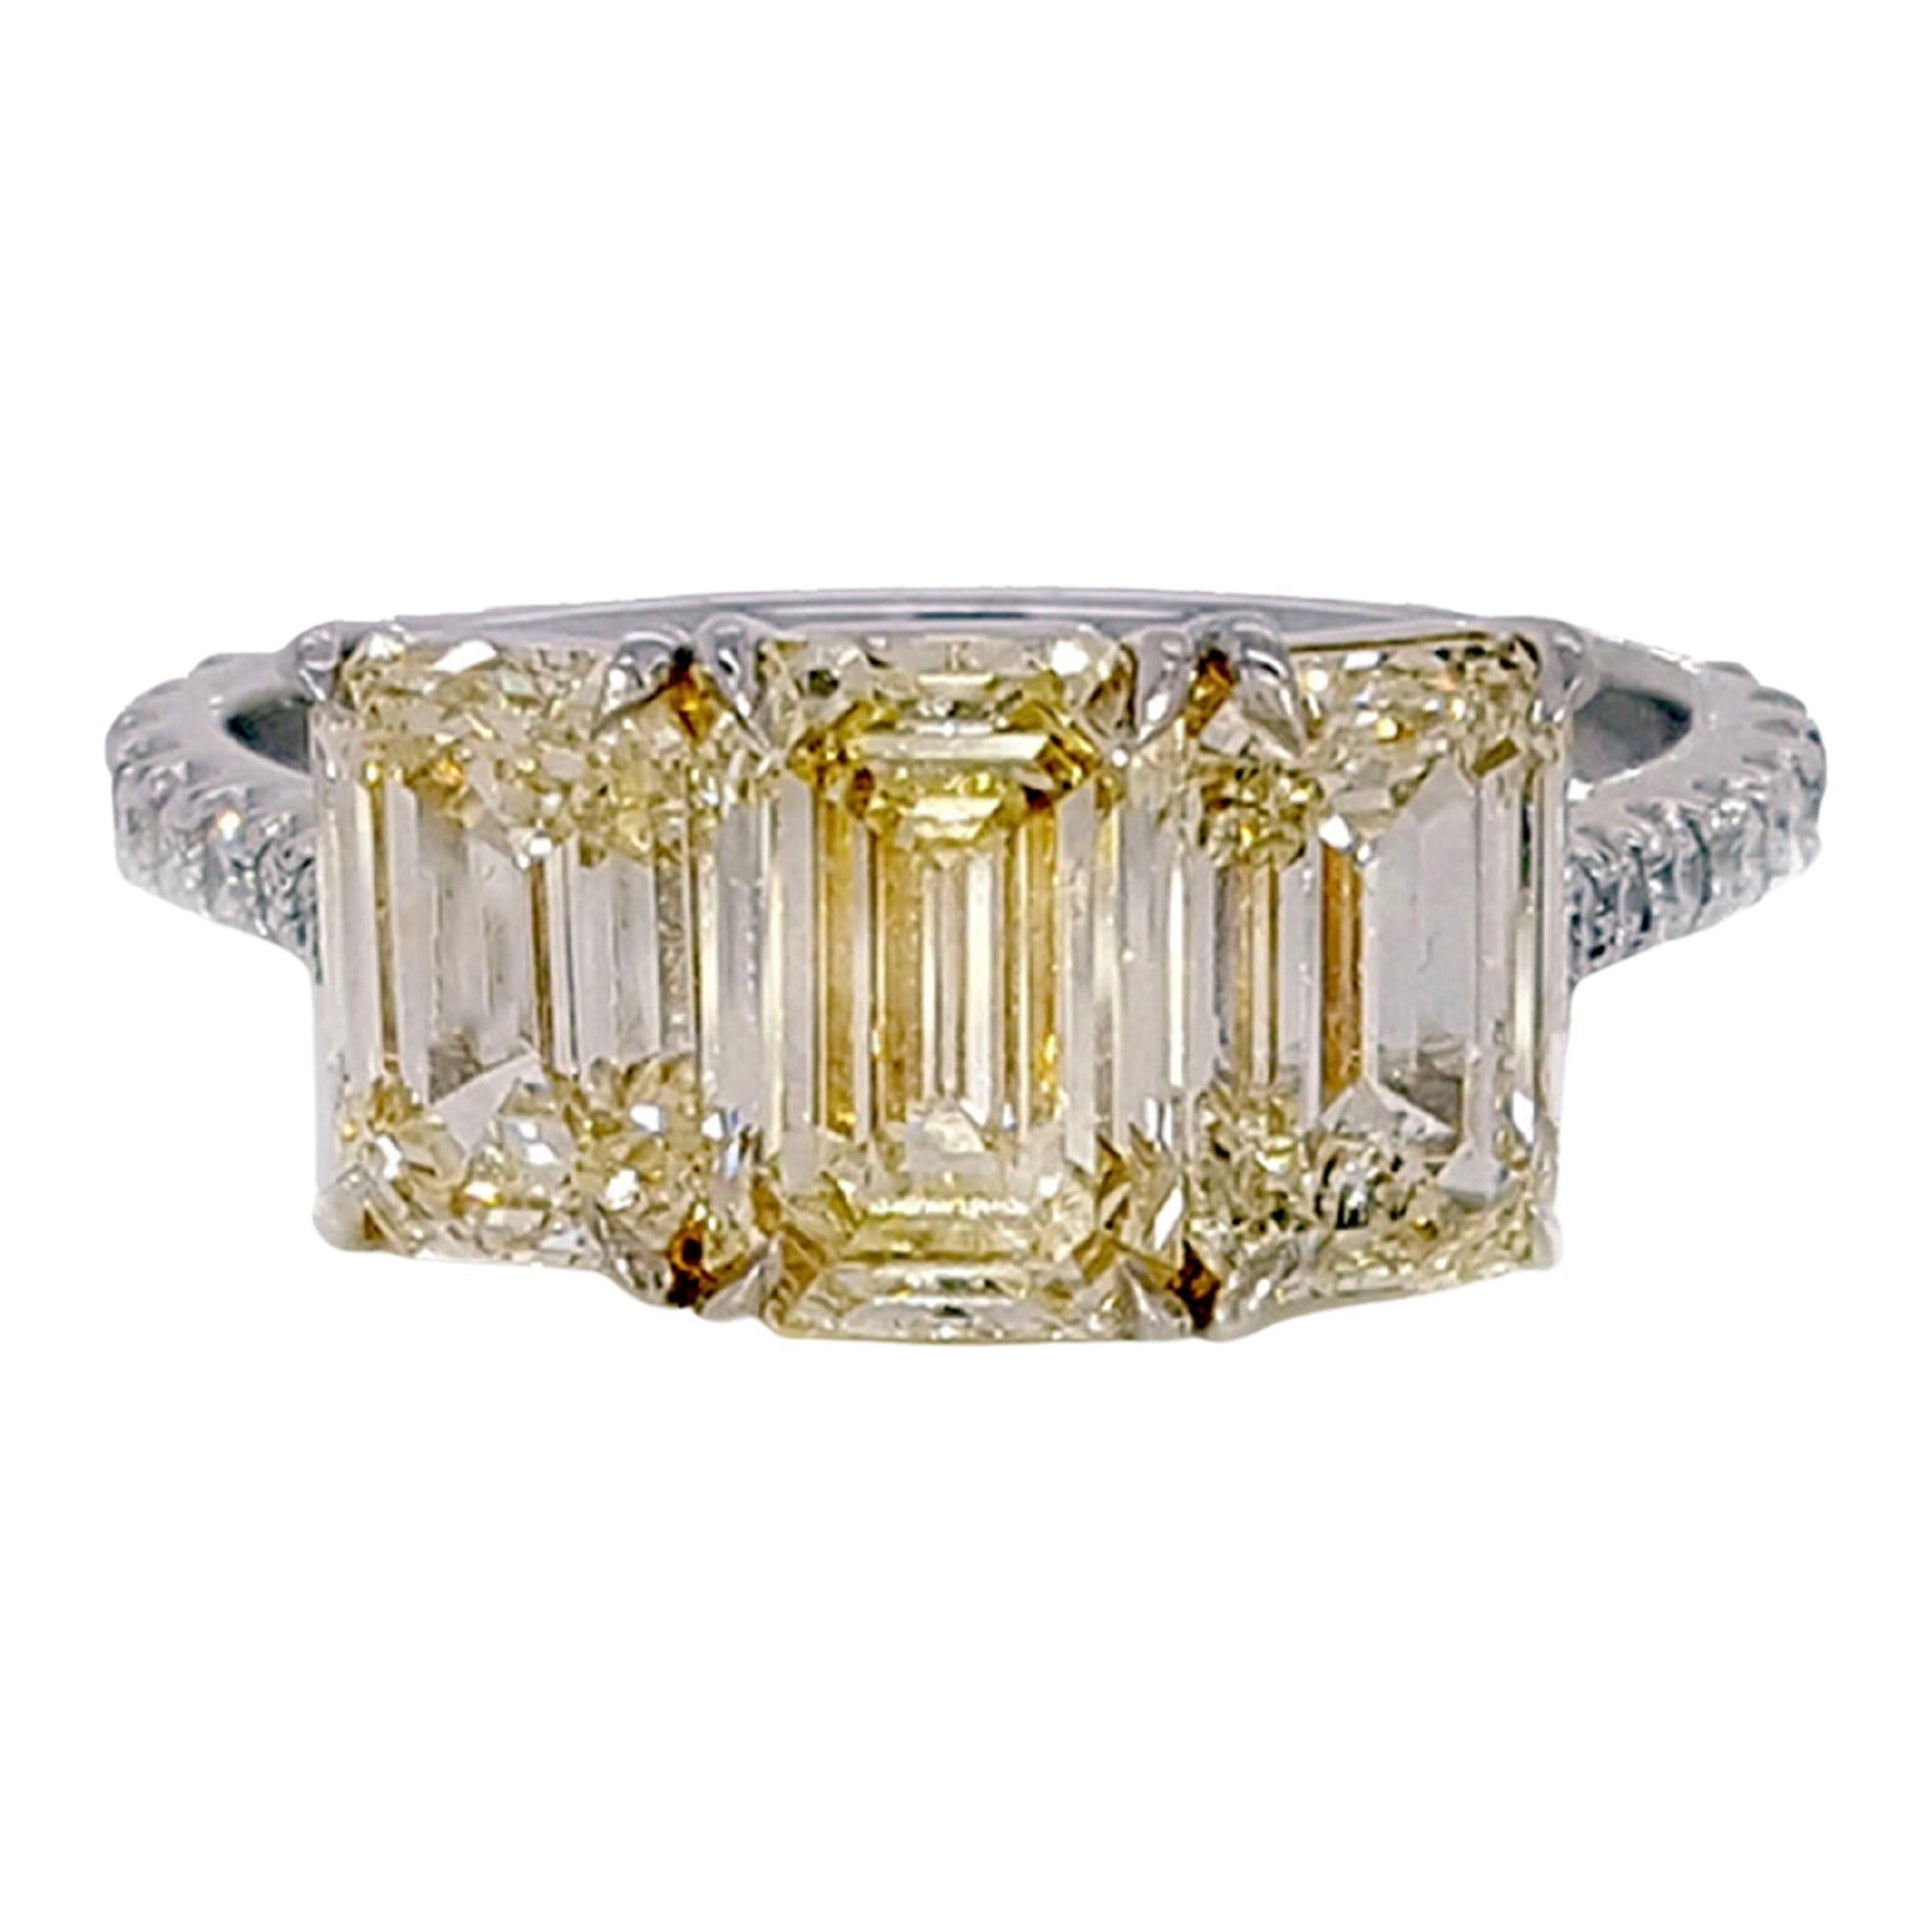 3.35 Carat Yellow Diamond Emerald Cut Three-Stone Engagement Ring, Platinum. For Sale